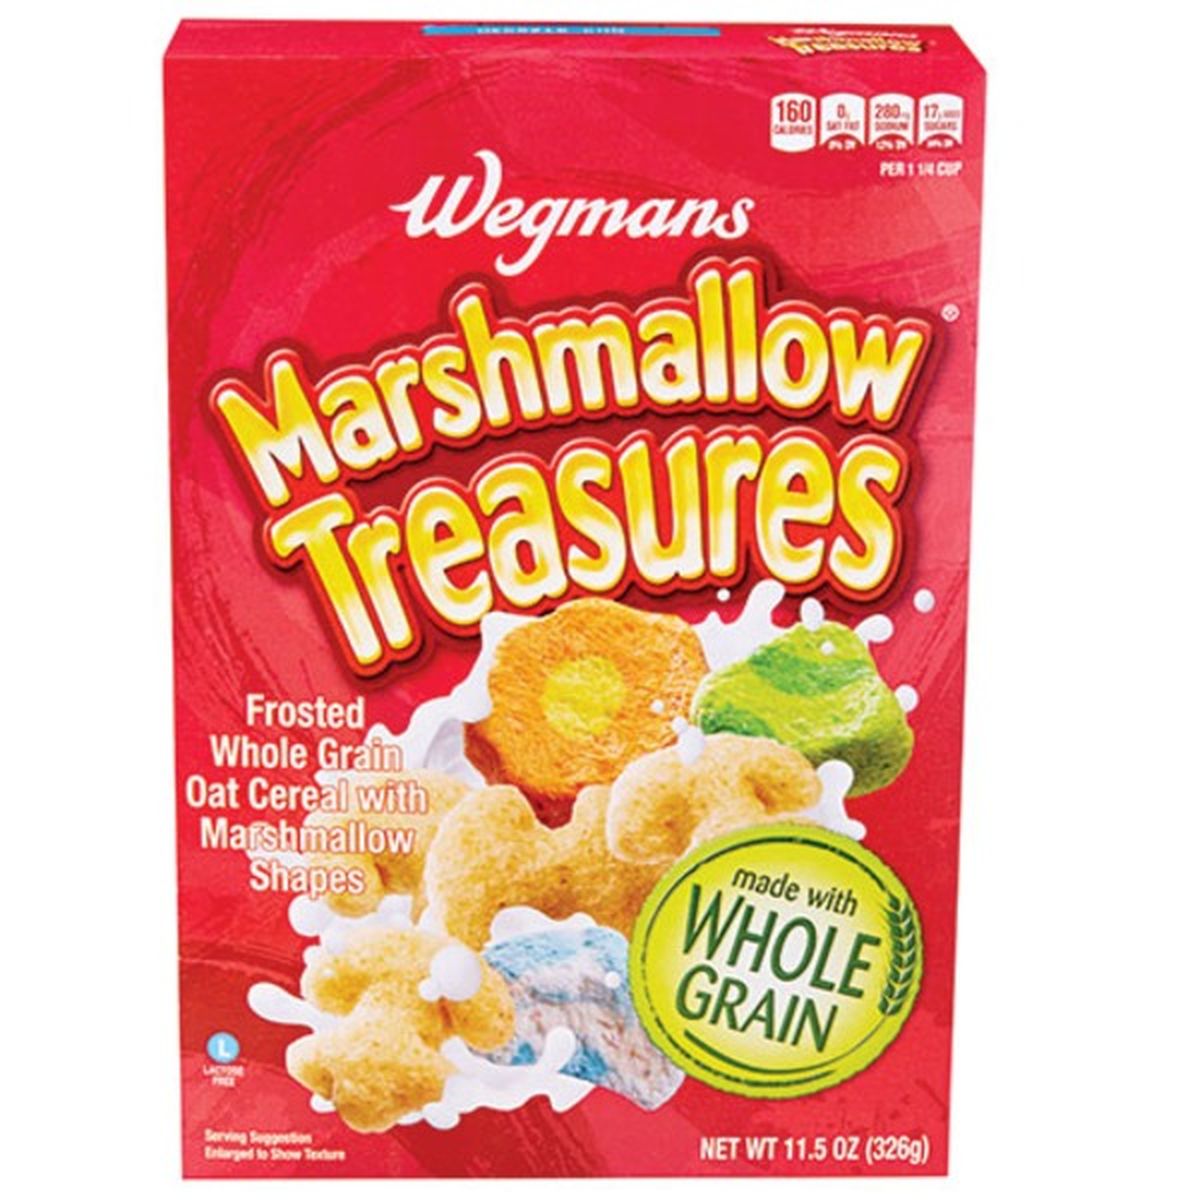 Calories in Wegmans Marshmallow Treasures Cereal